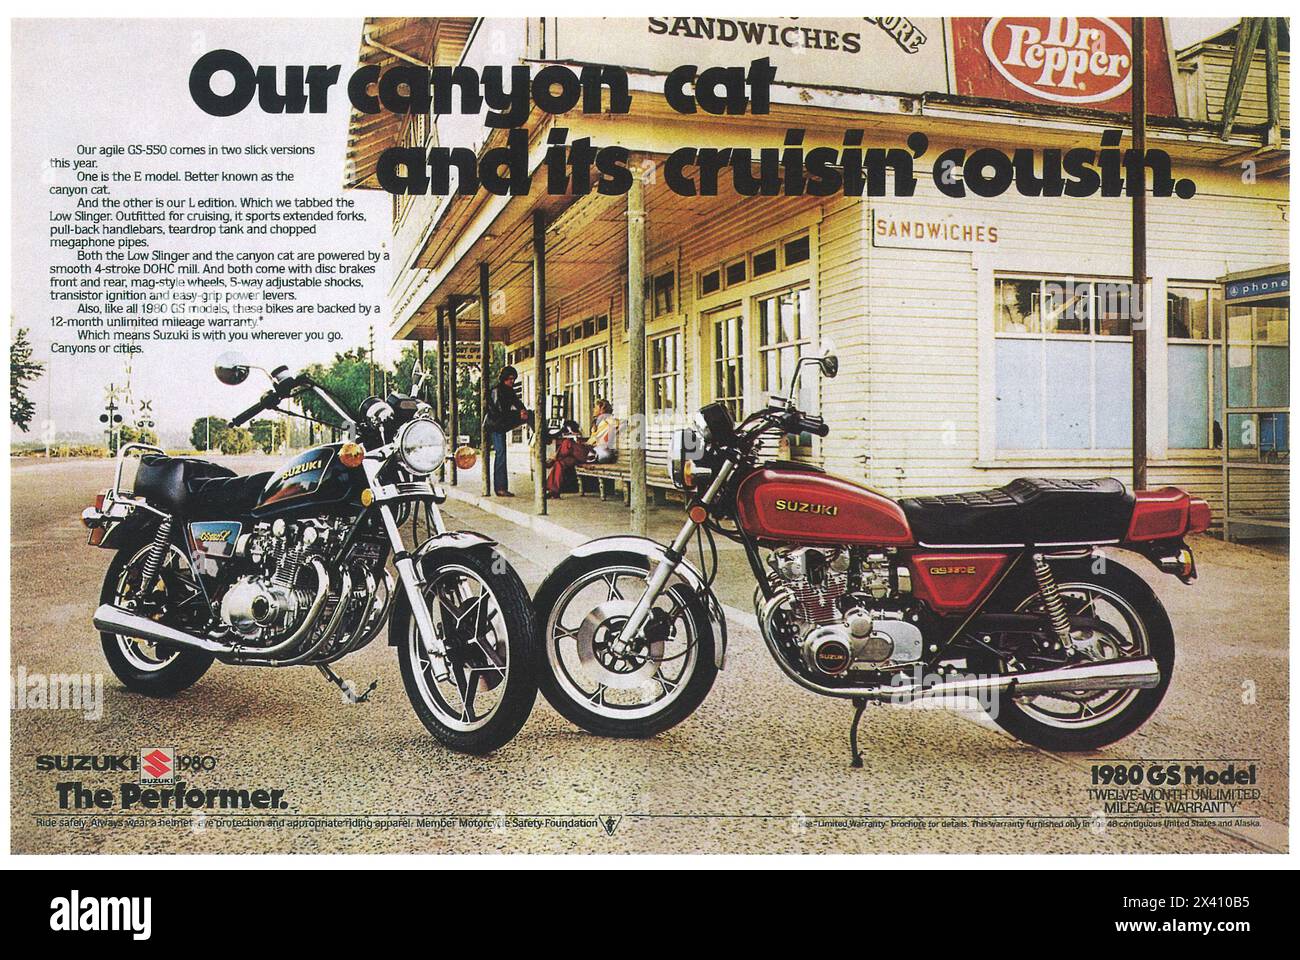 1980 Suzuki Motorcycles GS550 Ad -  Canyon Cat & Low Slinger Cruisin’ Cousin Stock Photo